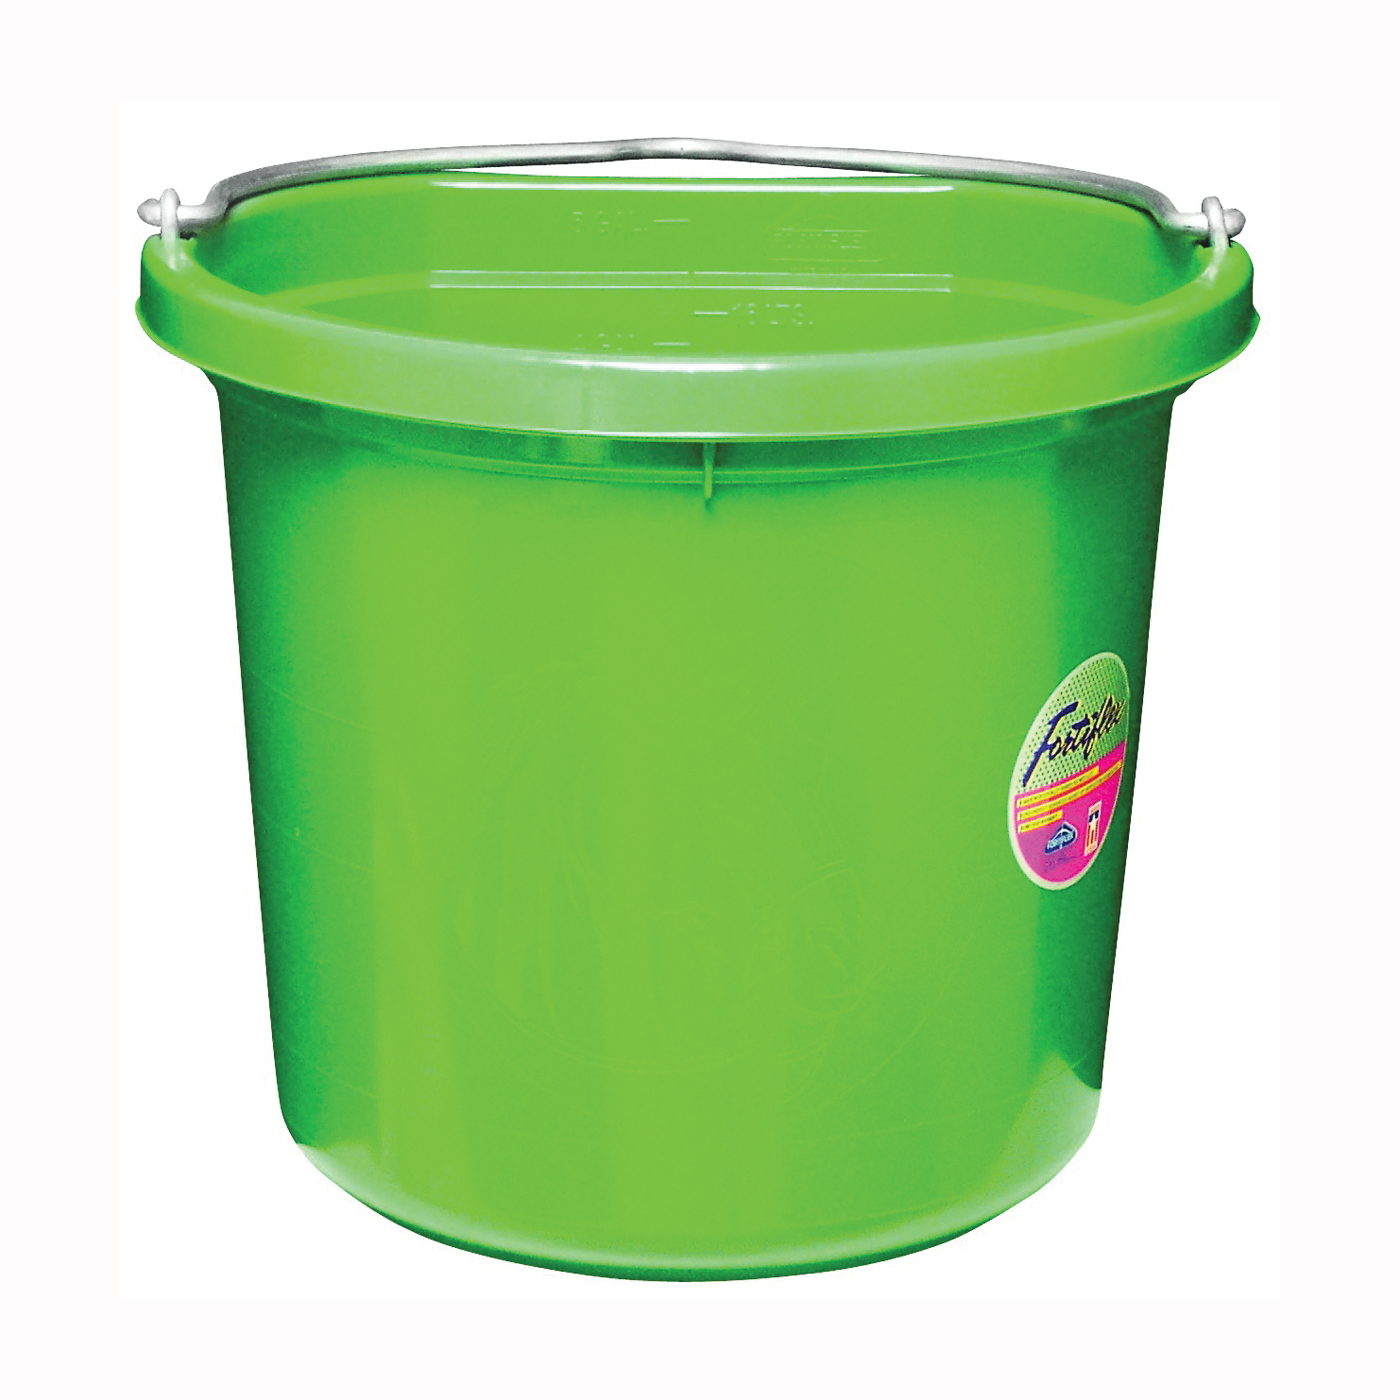 FB-120 FB-120GR Bucket, 20 qt Volume, Rubber/Polyethylene, Green